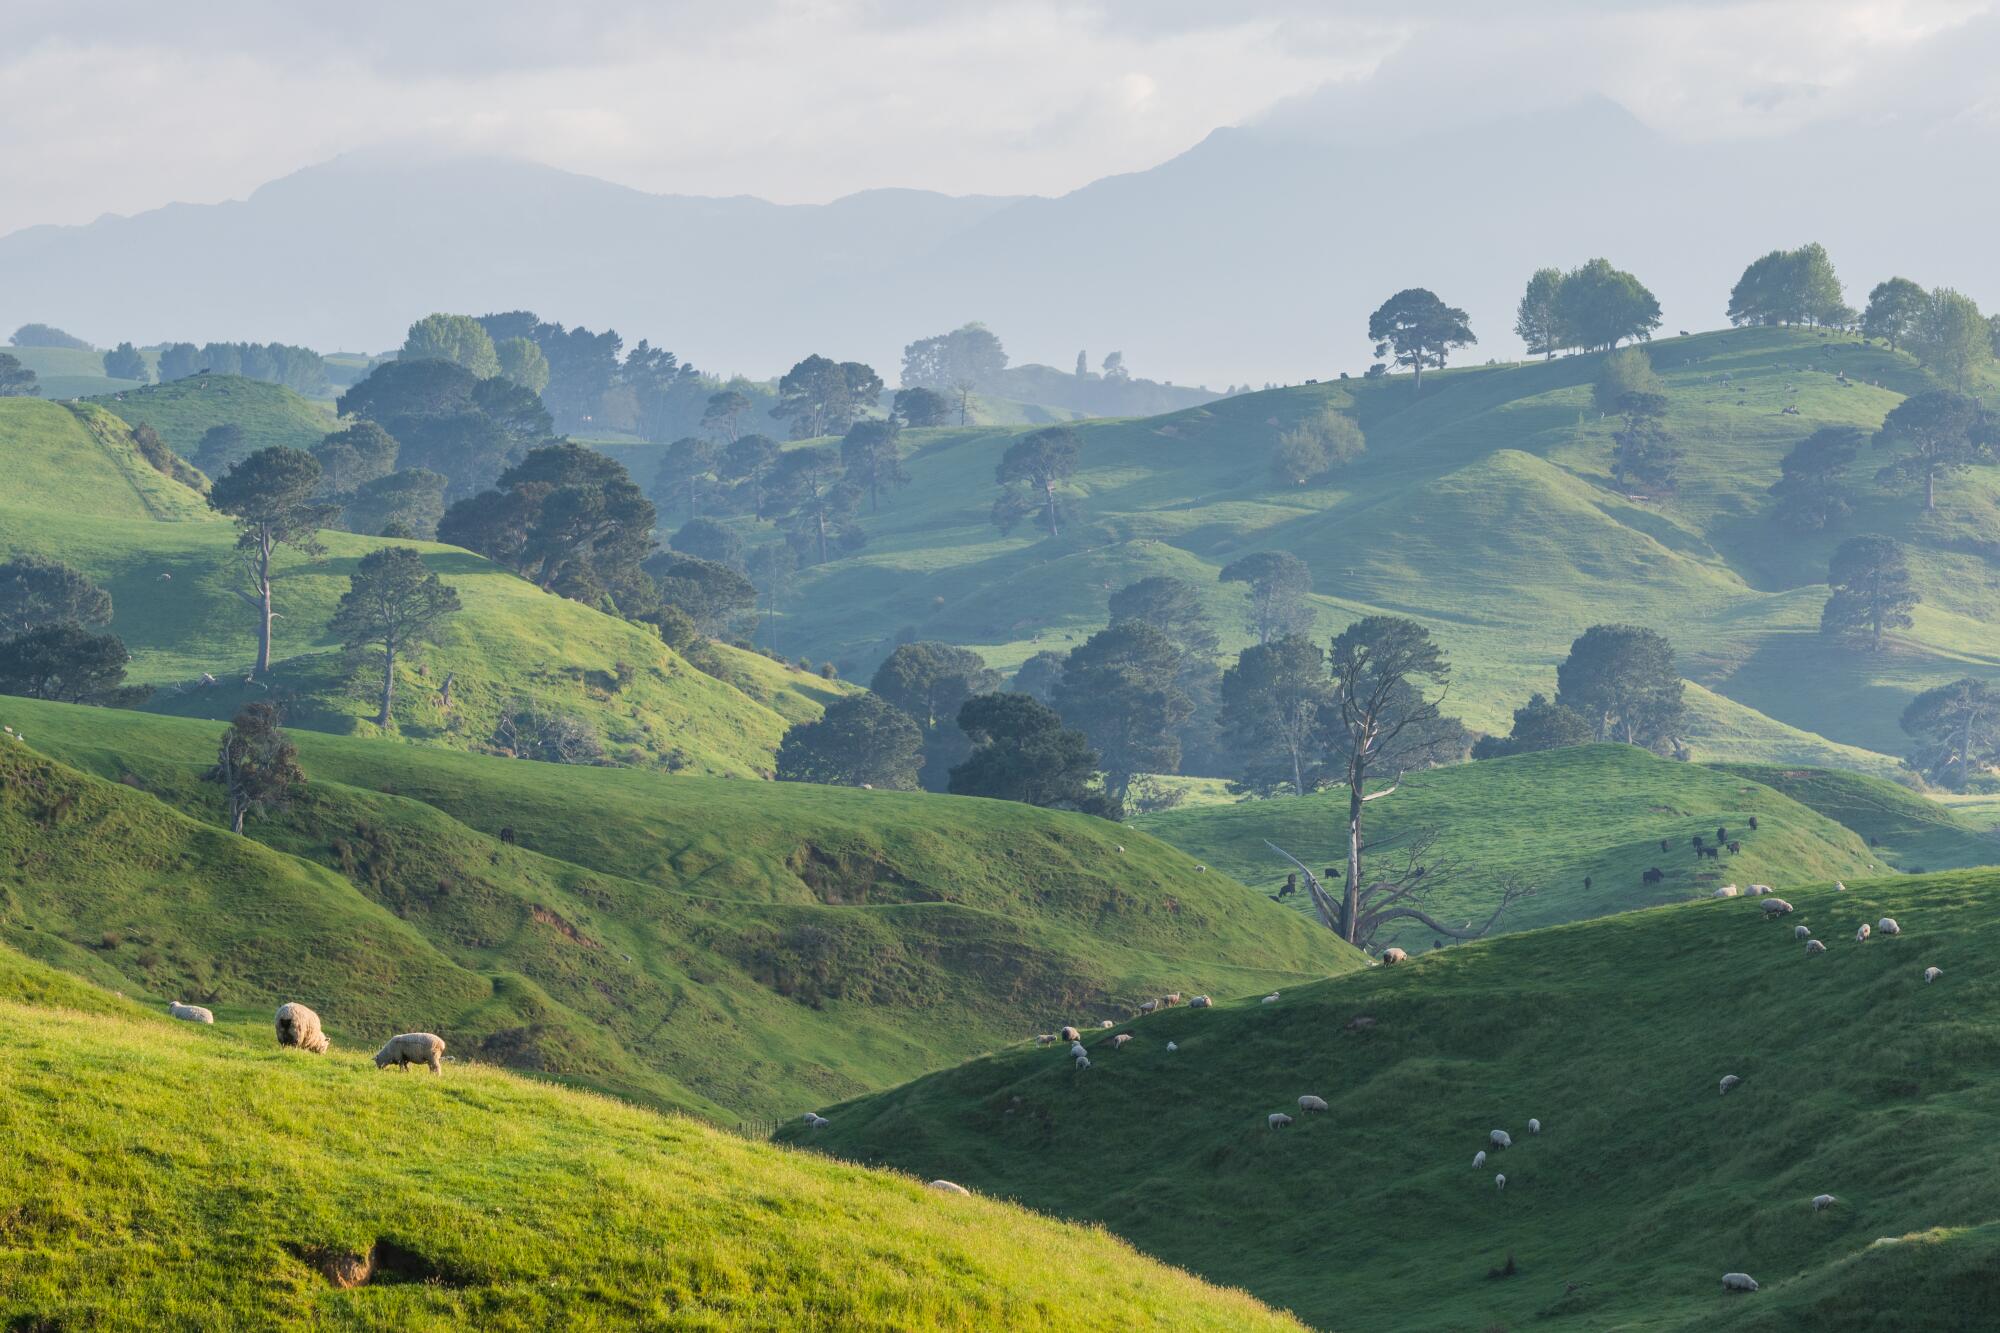  New Zealand farmland and green rolling hills.